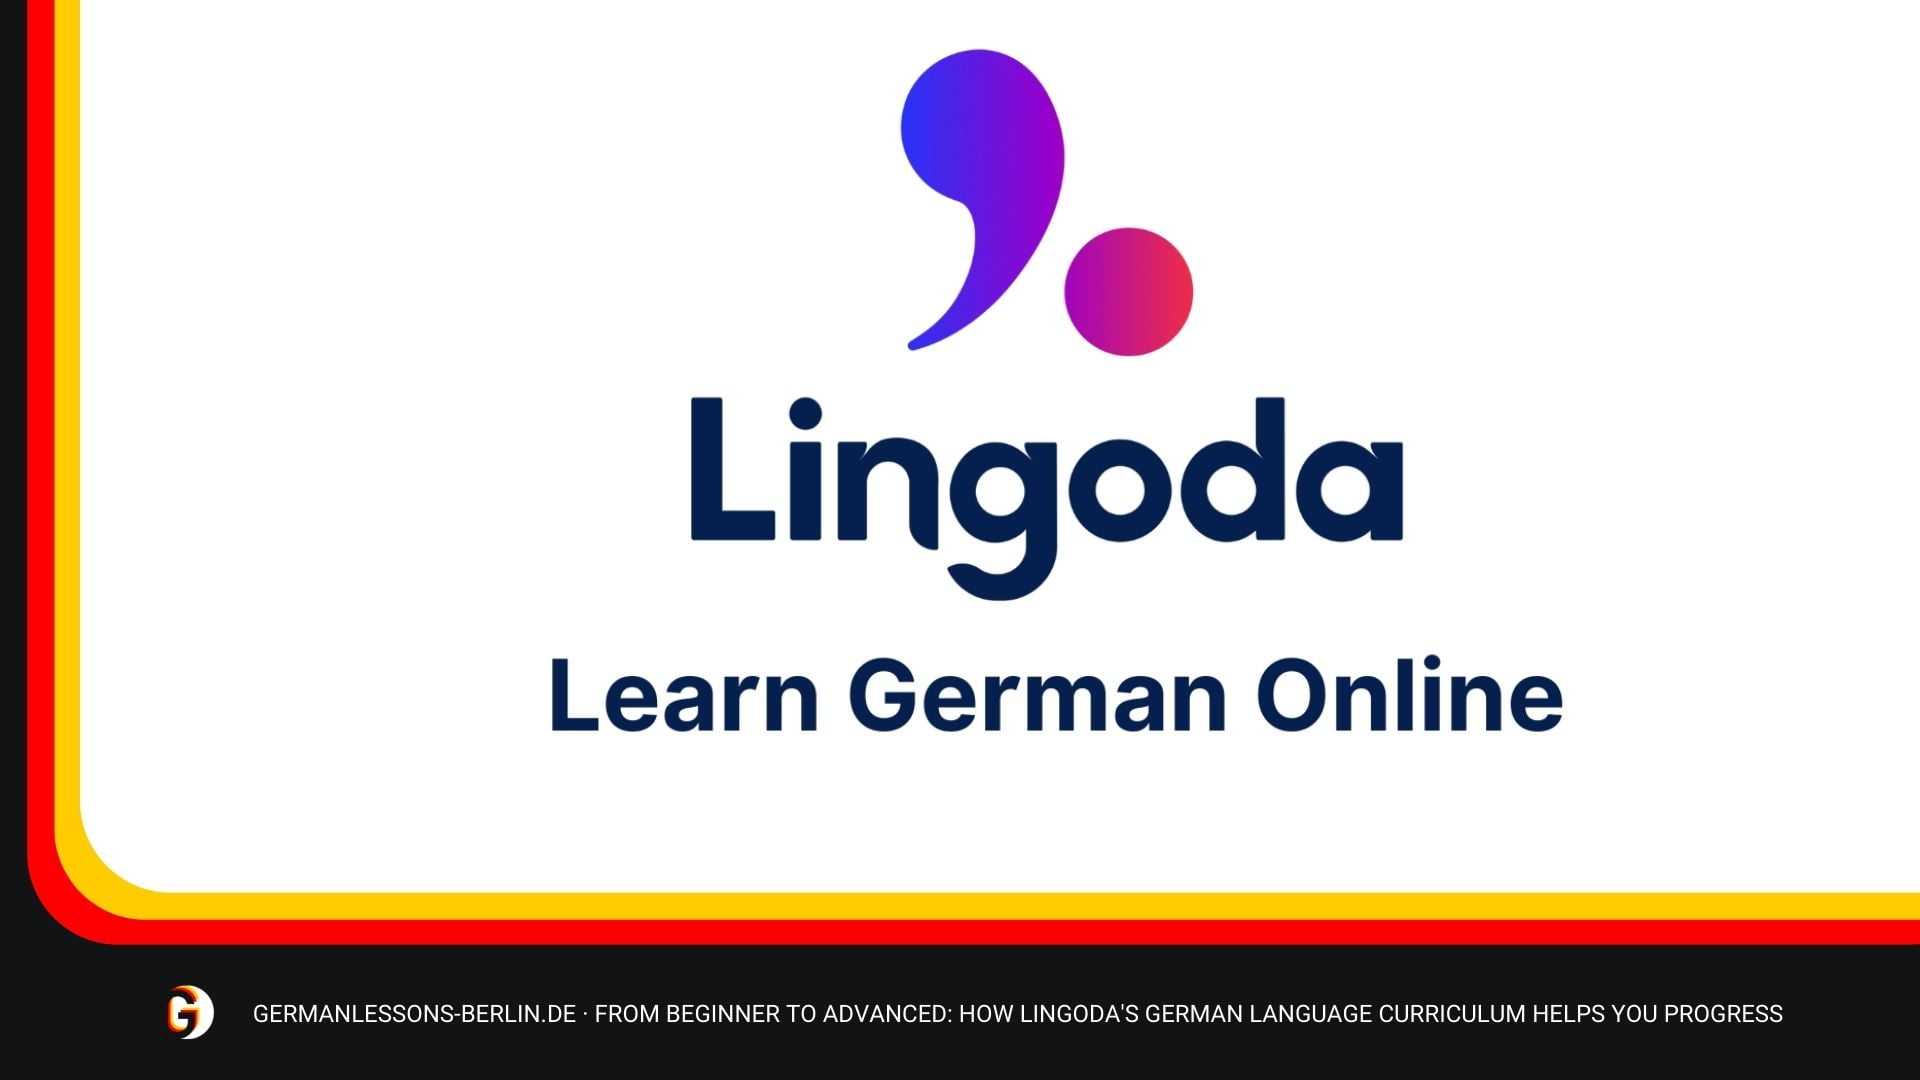 Lingoda's German Language Curriculum